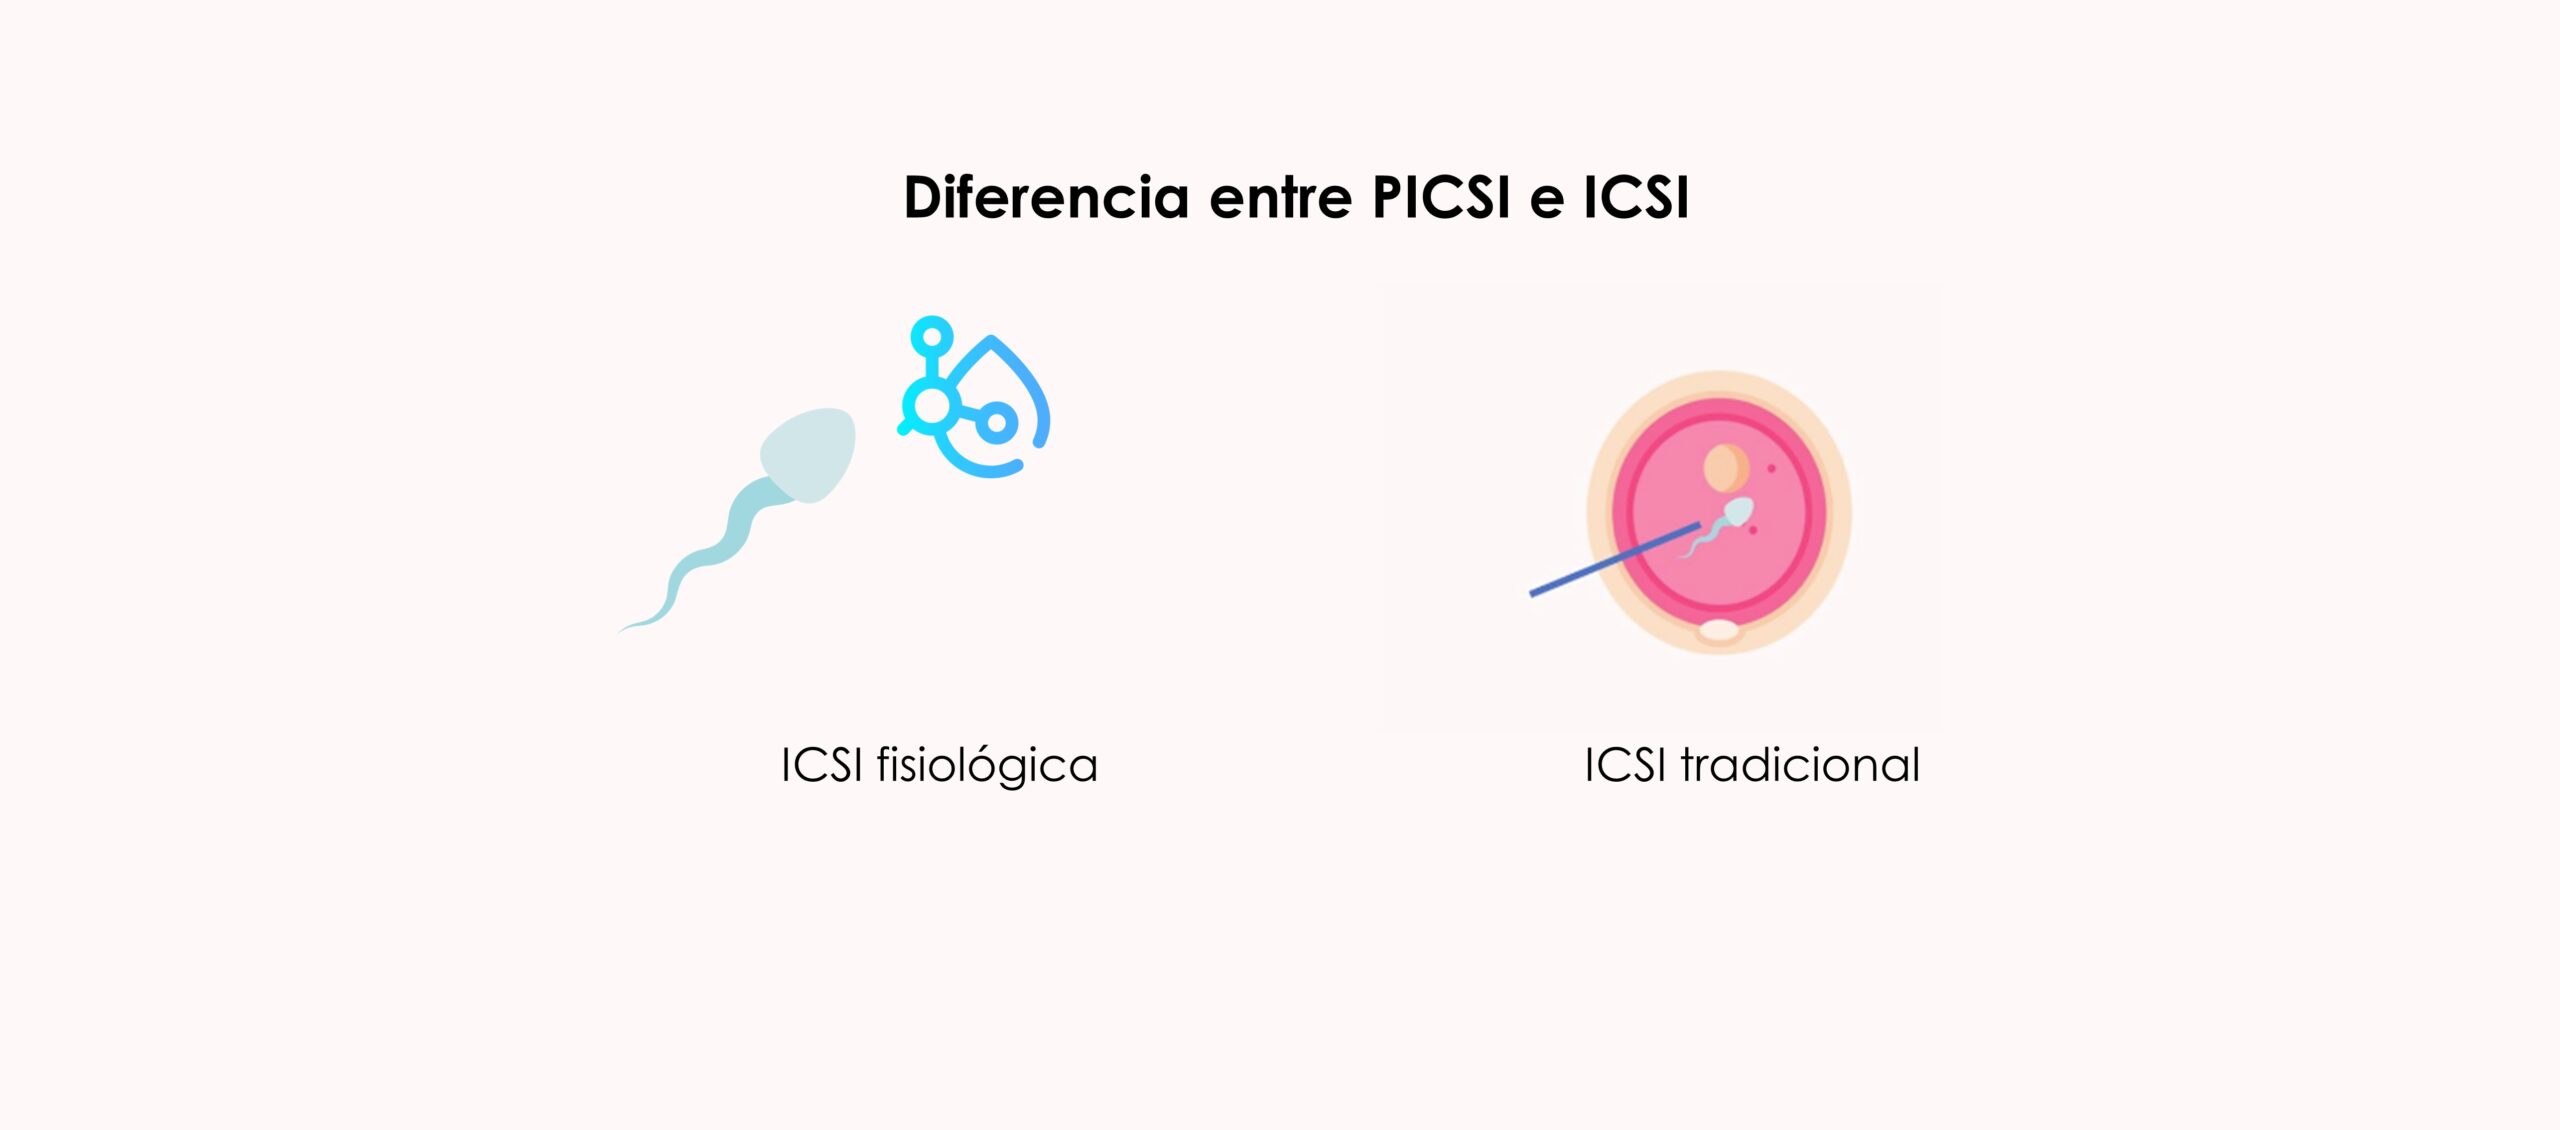 Diferencias entre ICSI convencional e ICSI fisiológico (PICSI)